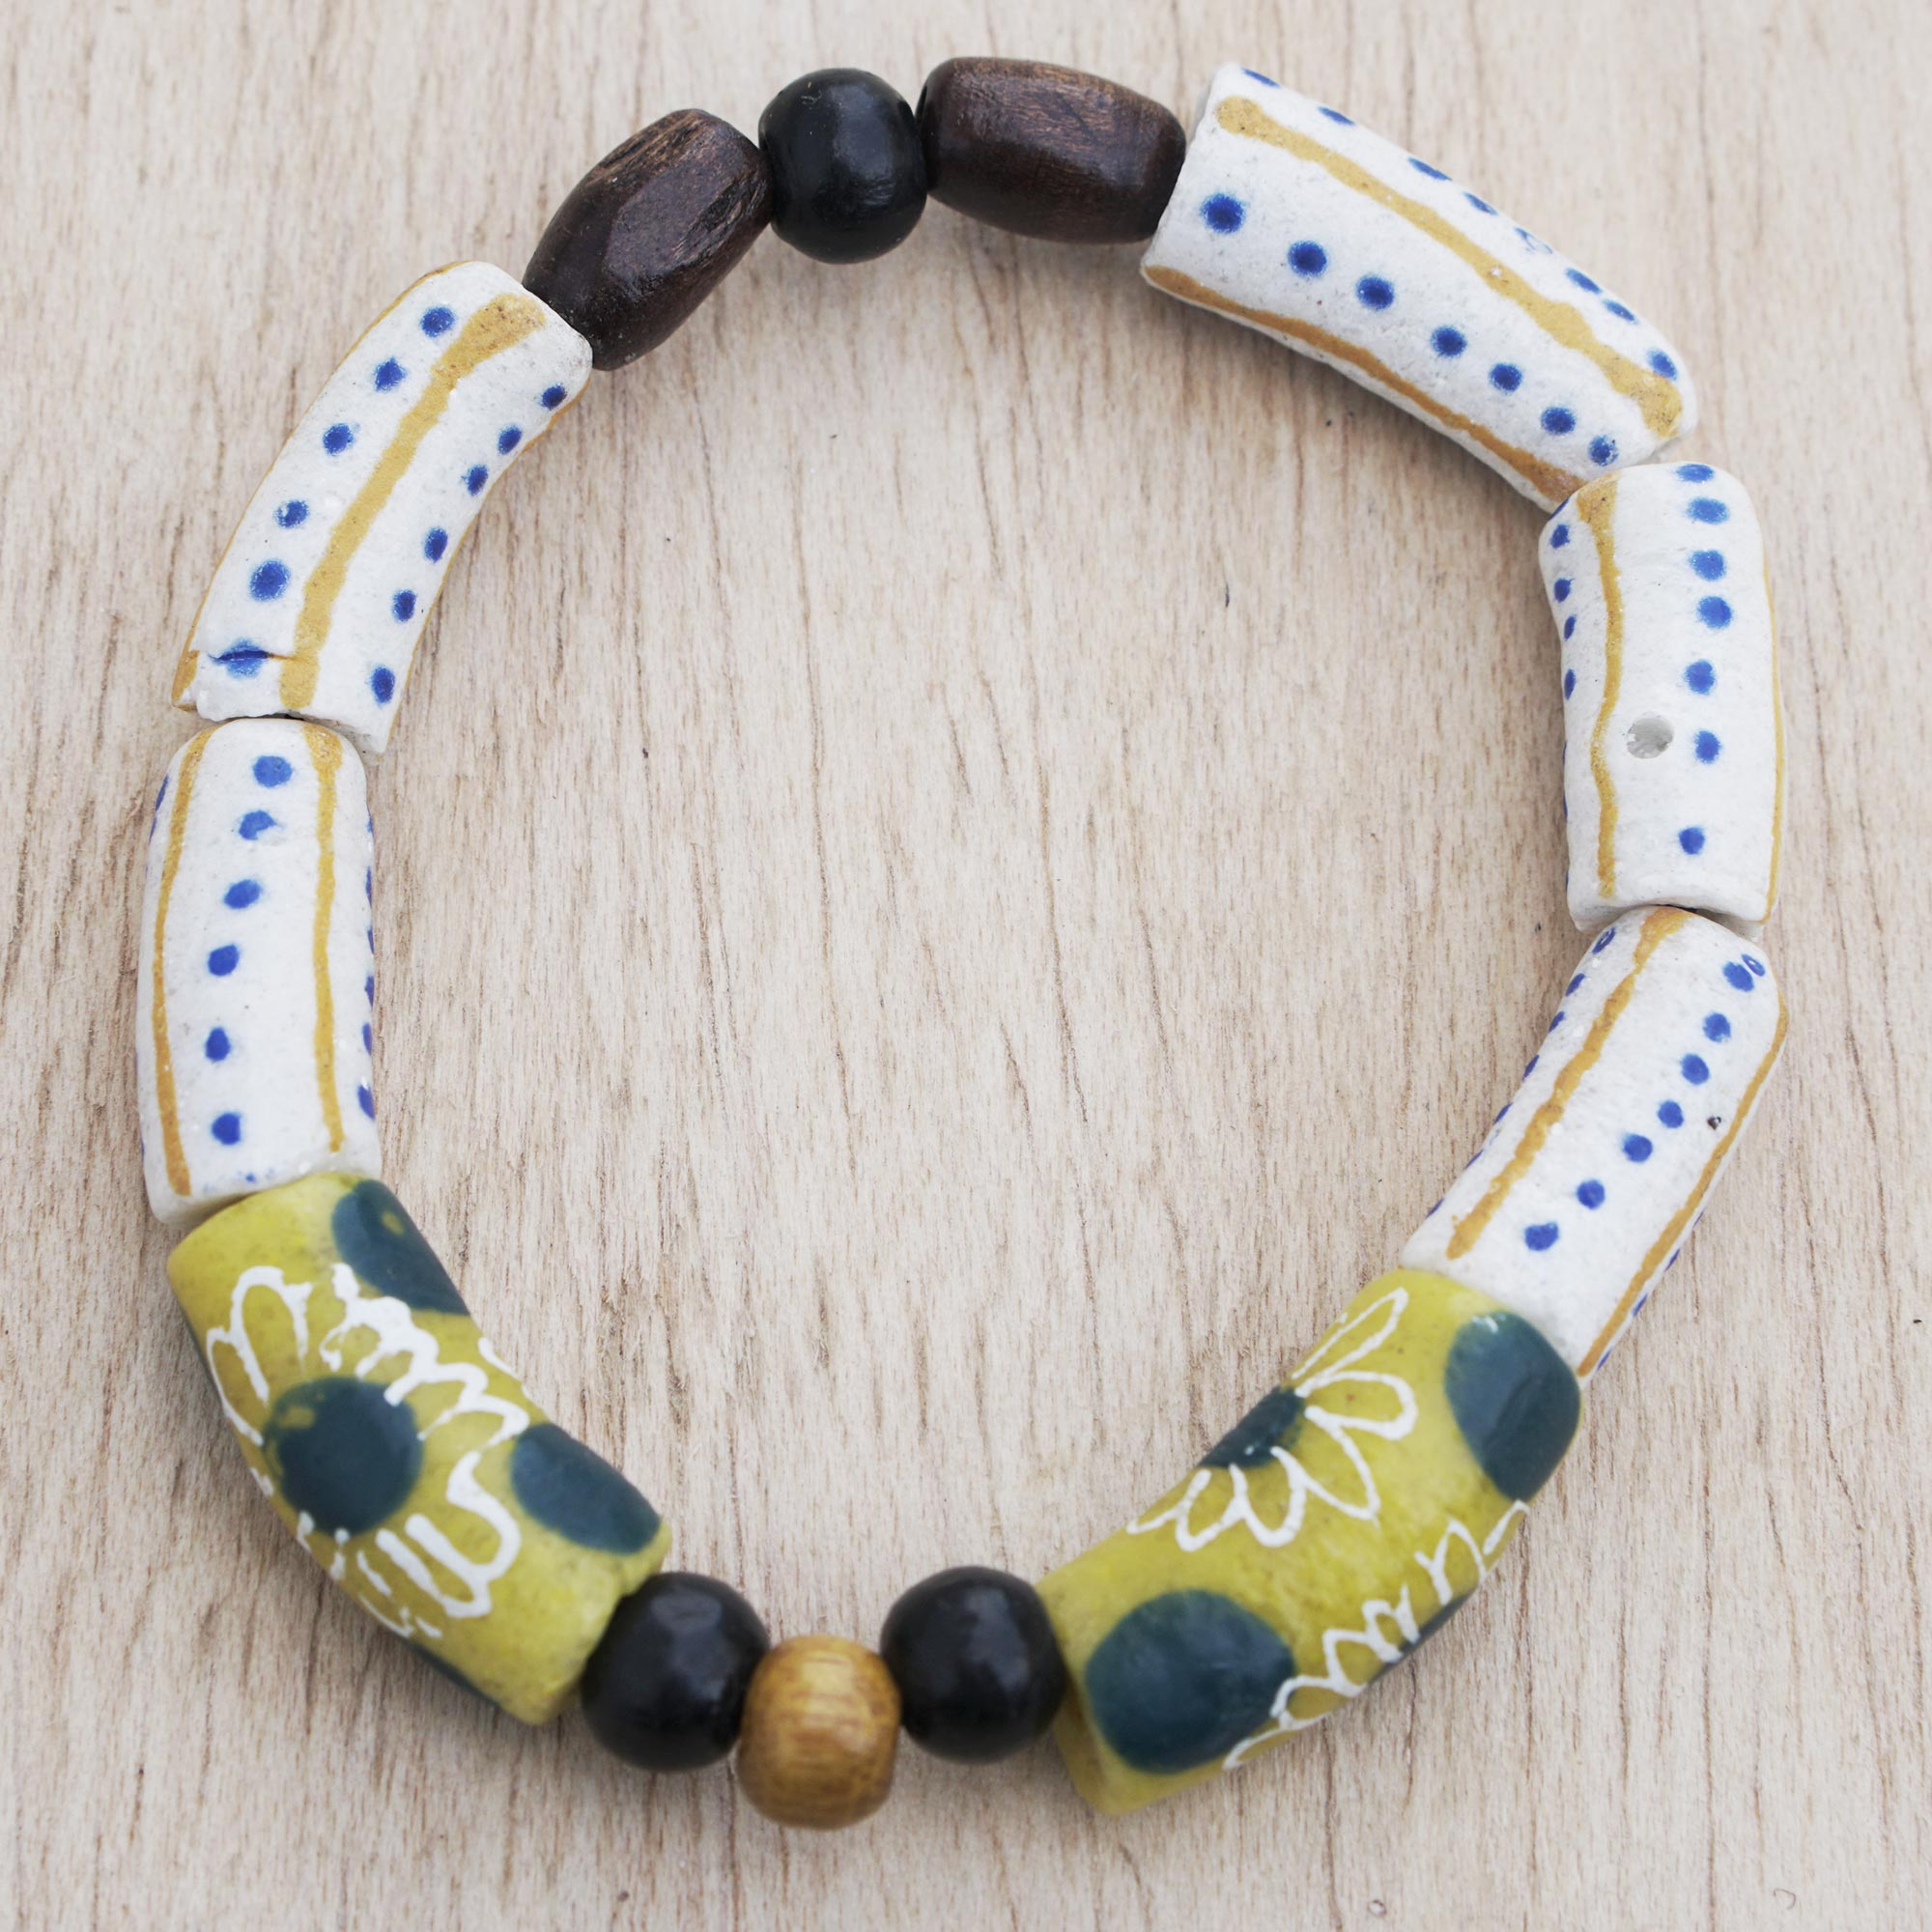 stretch bracelet jewelry set handmade Green pink polka dot bracelet wood beads